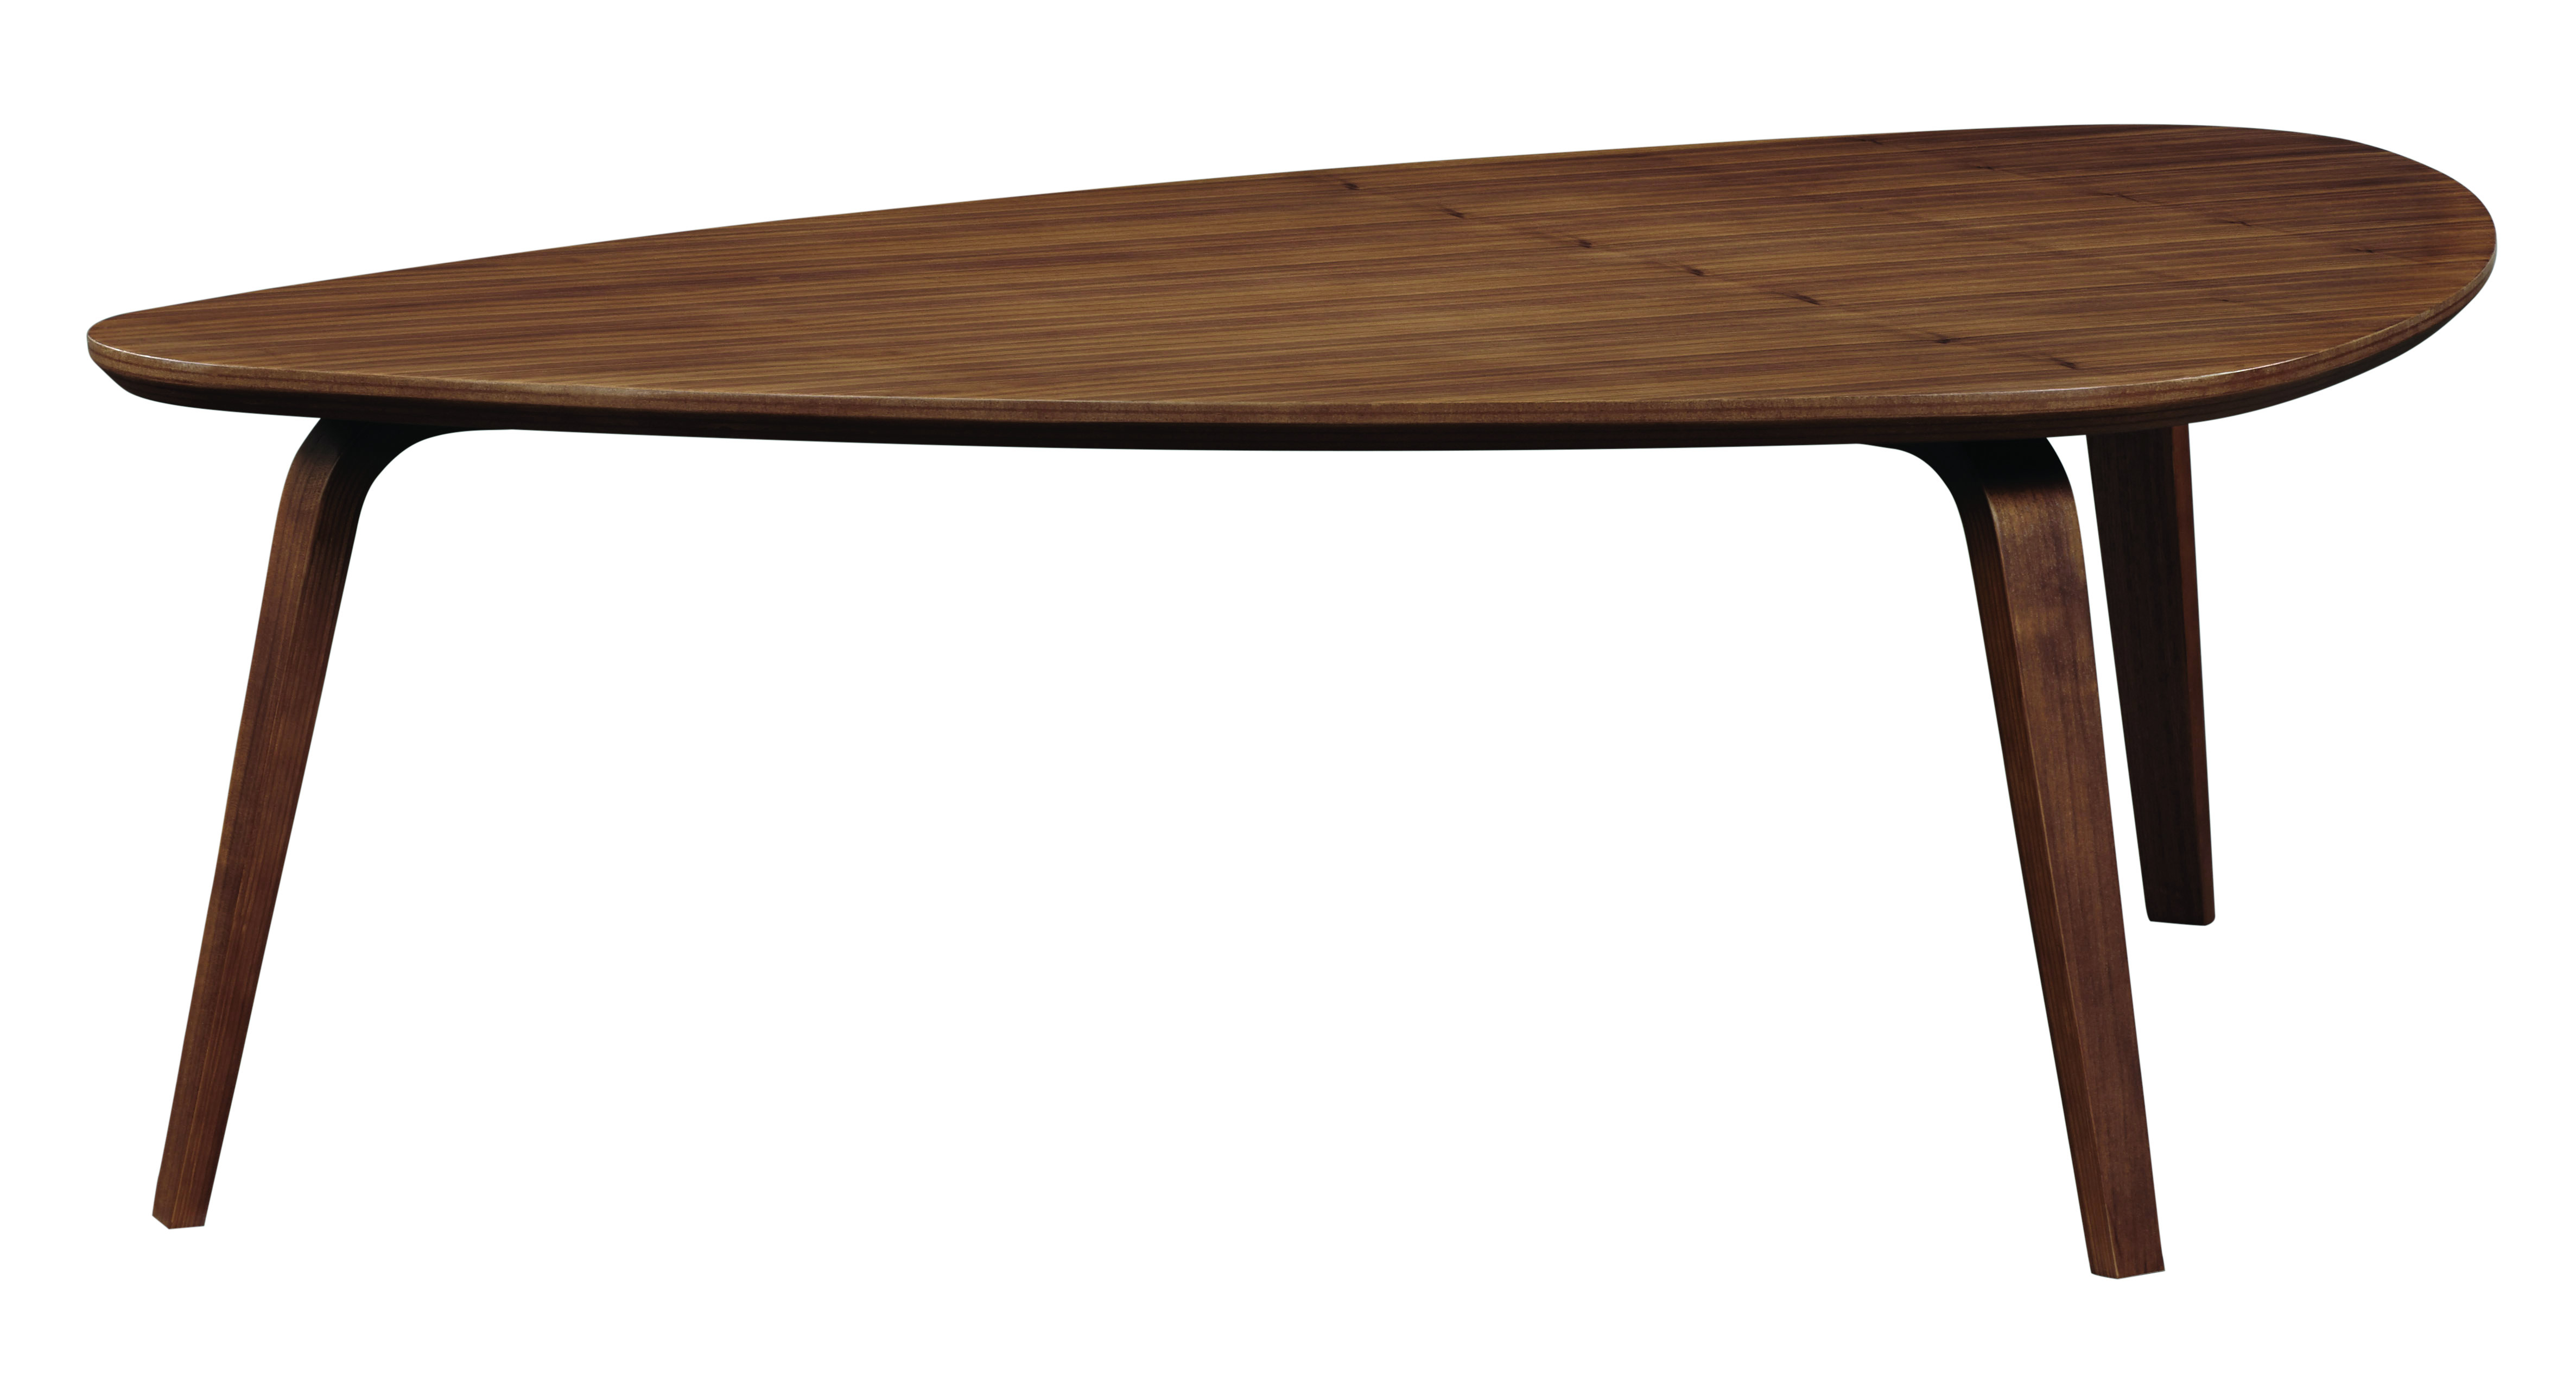 Bradbury Triangular Coffee Table Allmodern throughout measurements 4746 X 2562